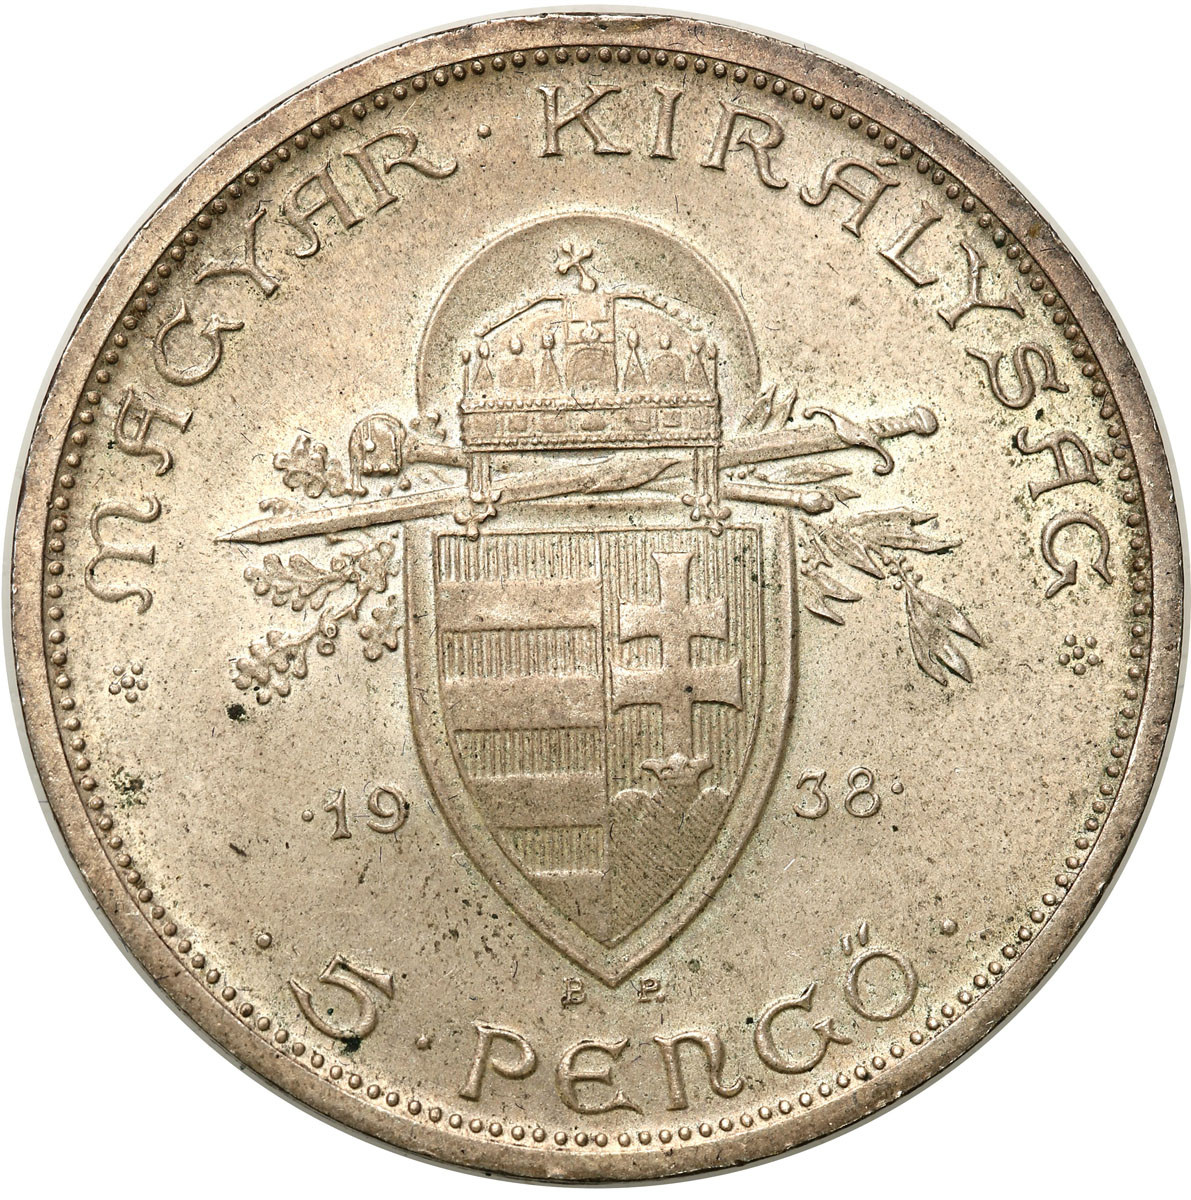 Węgry. 5 pengo 1938 - PIĘKNE